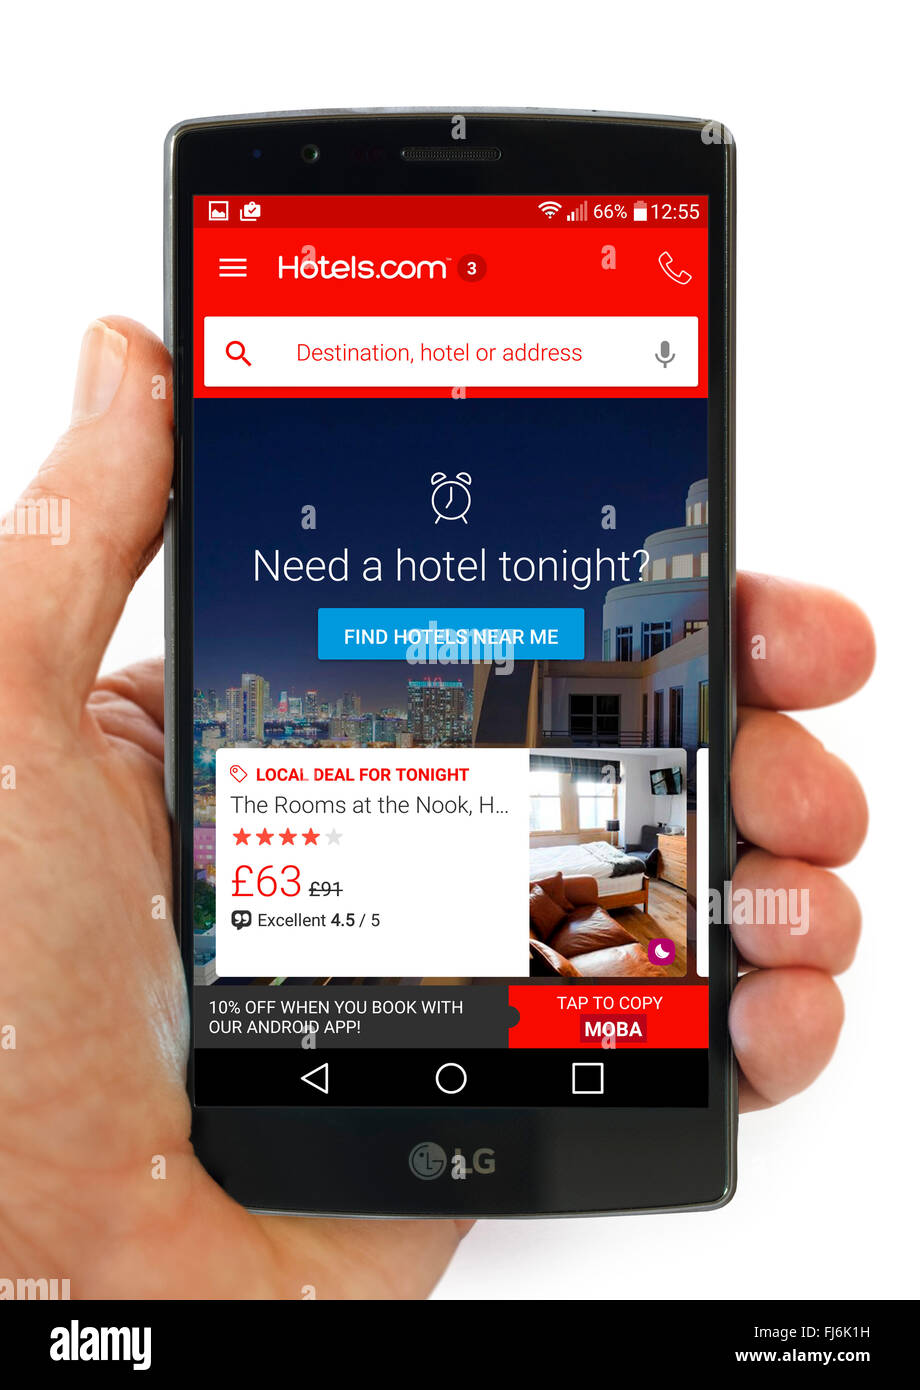 Hotels.com app su un LG G4 5,5 pollici per smartphone Android Foto Stock